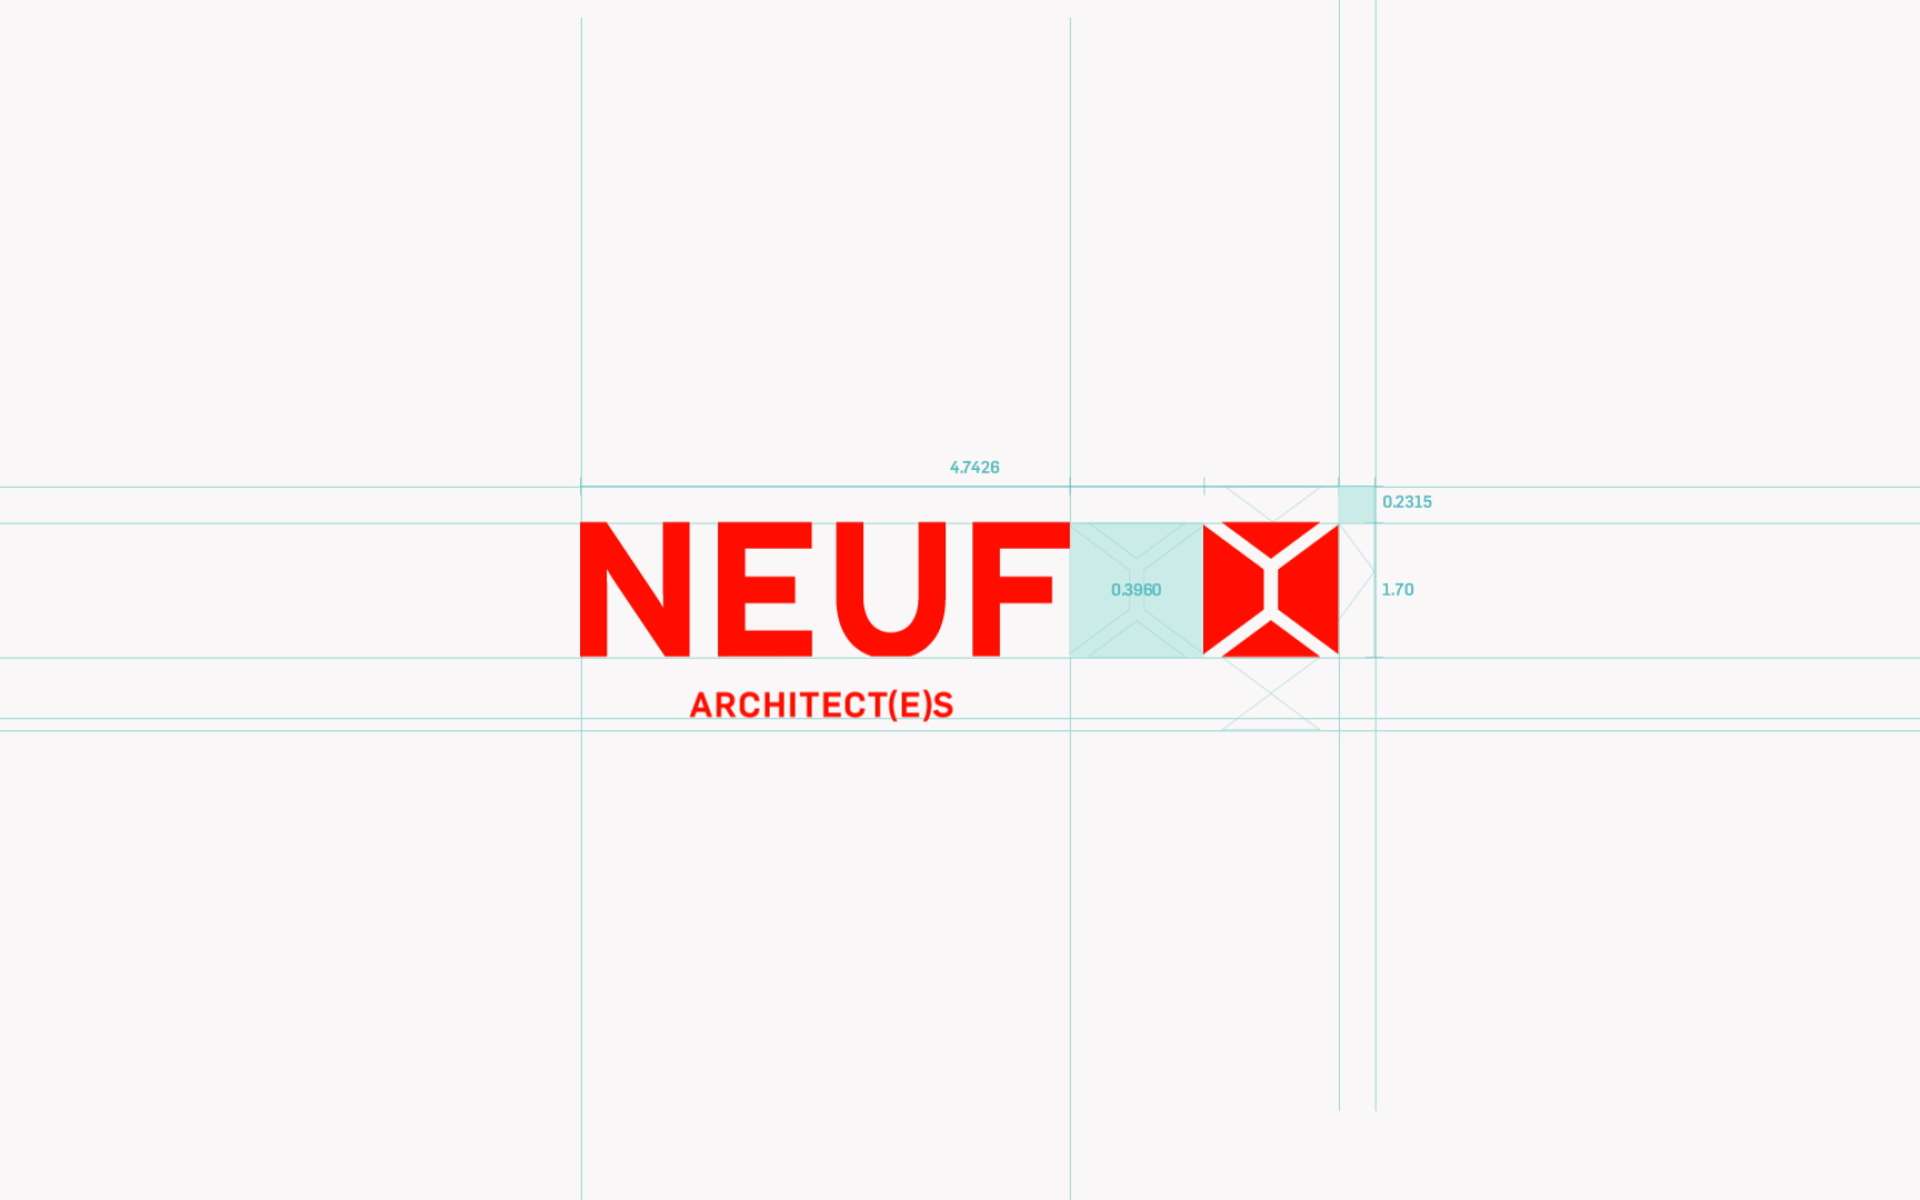 Neuf Architect(e)s - De DCYSA à NEUF architect(e)s